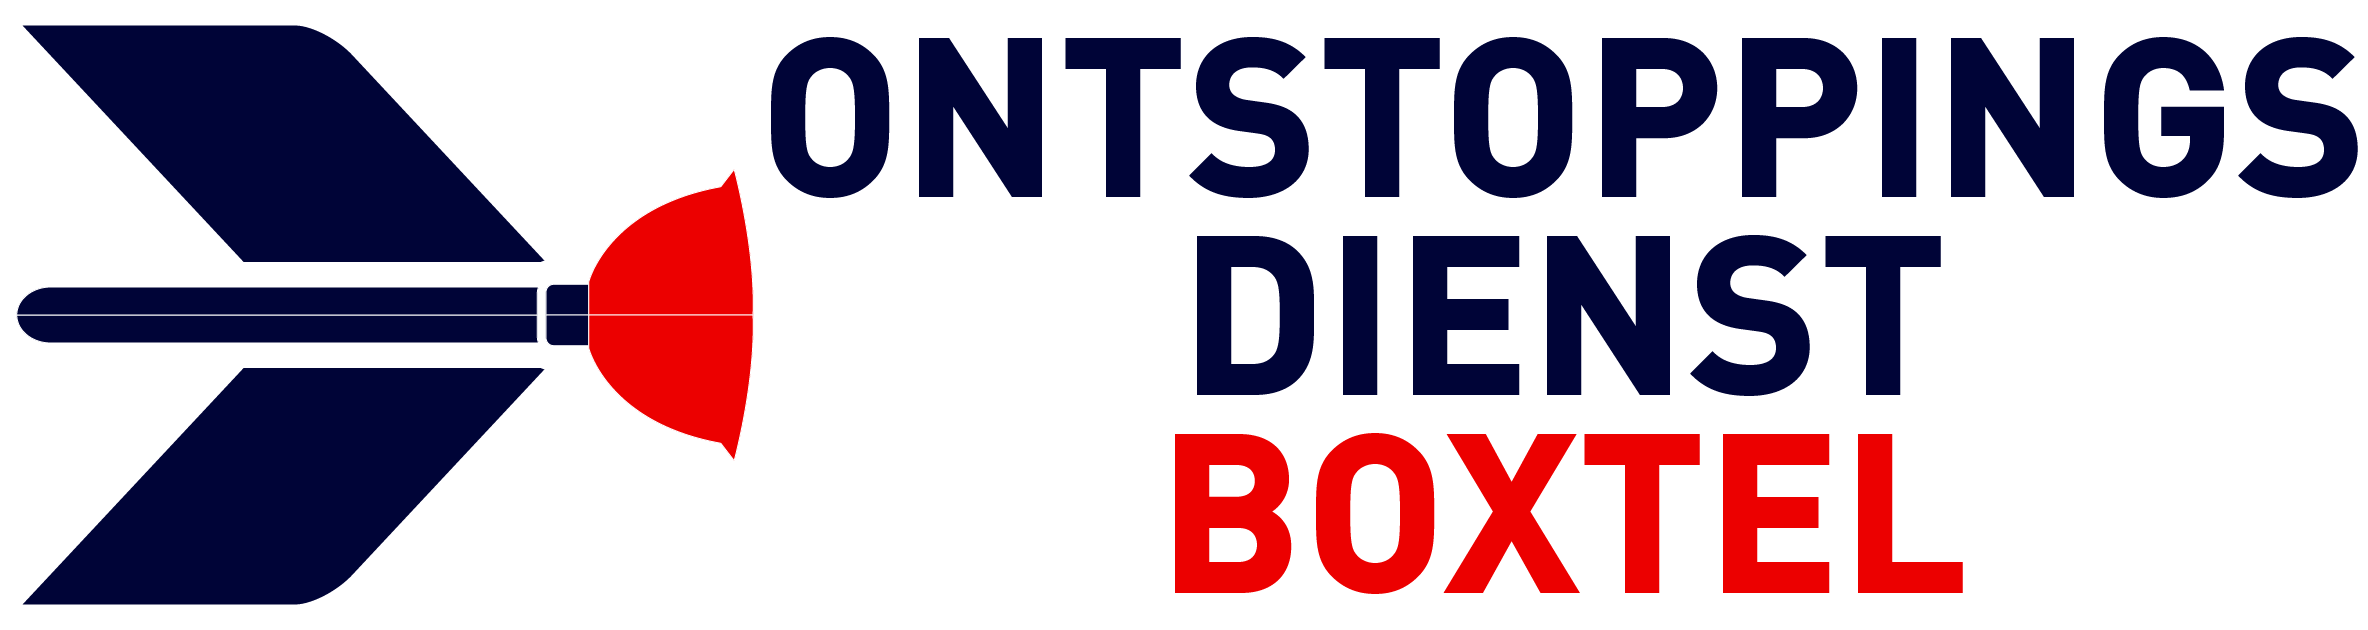 Ontstoppingsdienst Boxtel logo